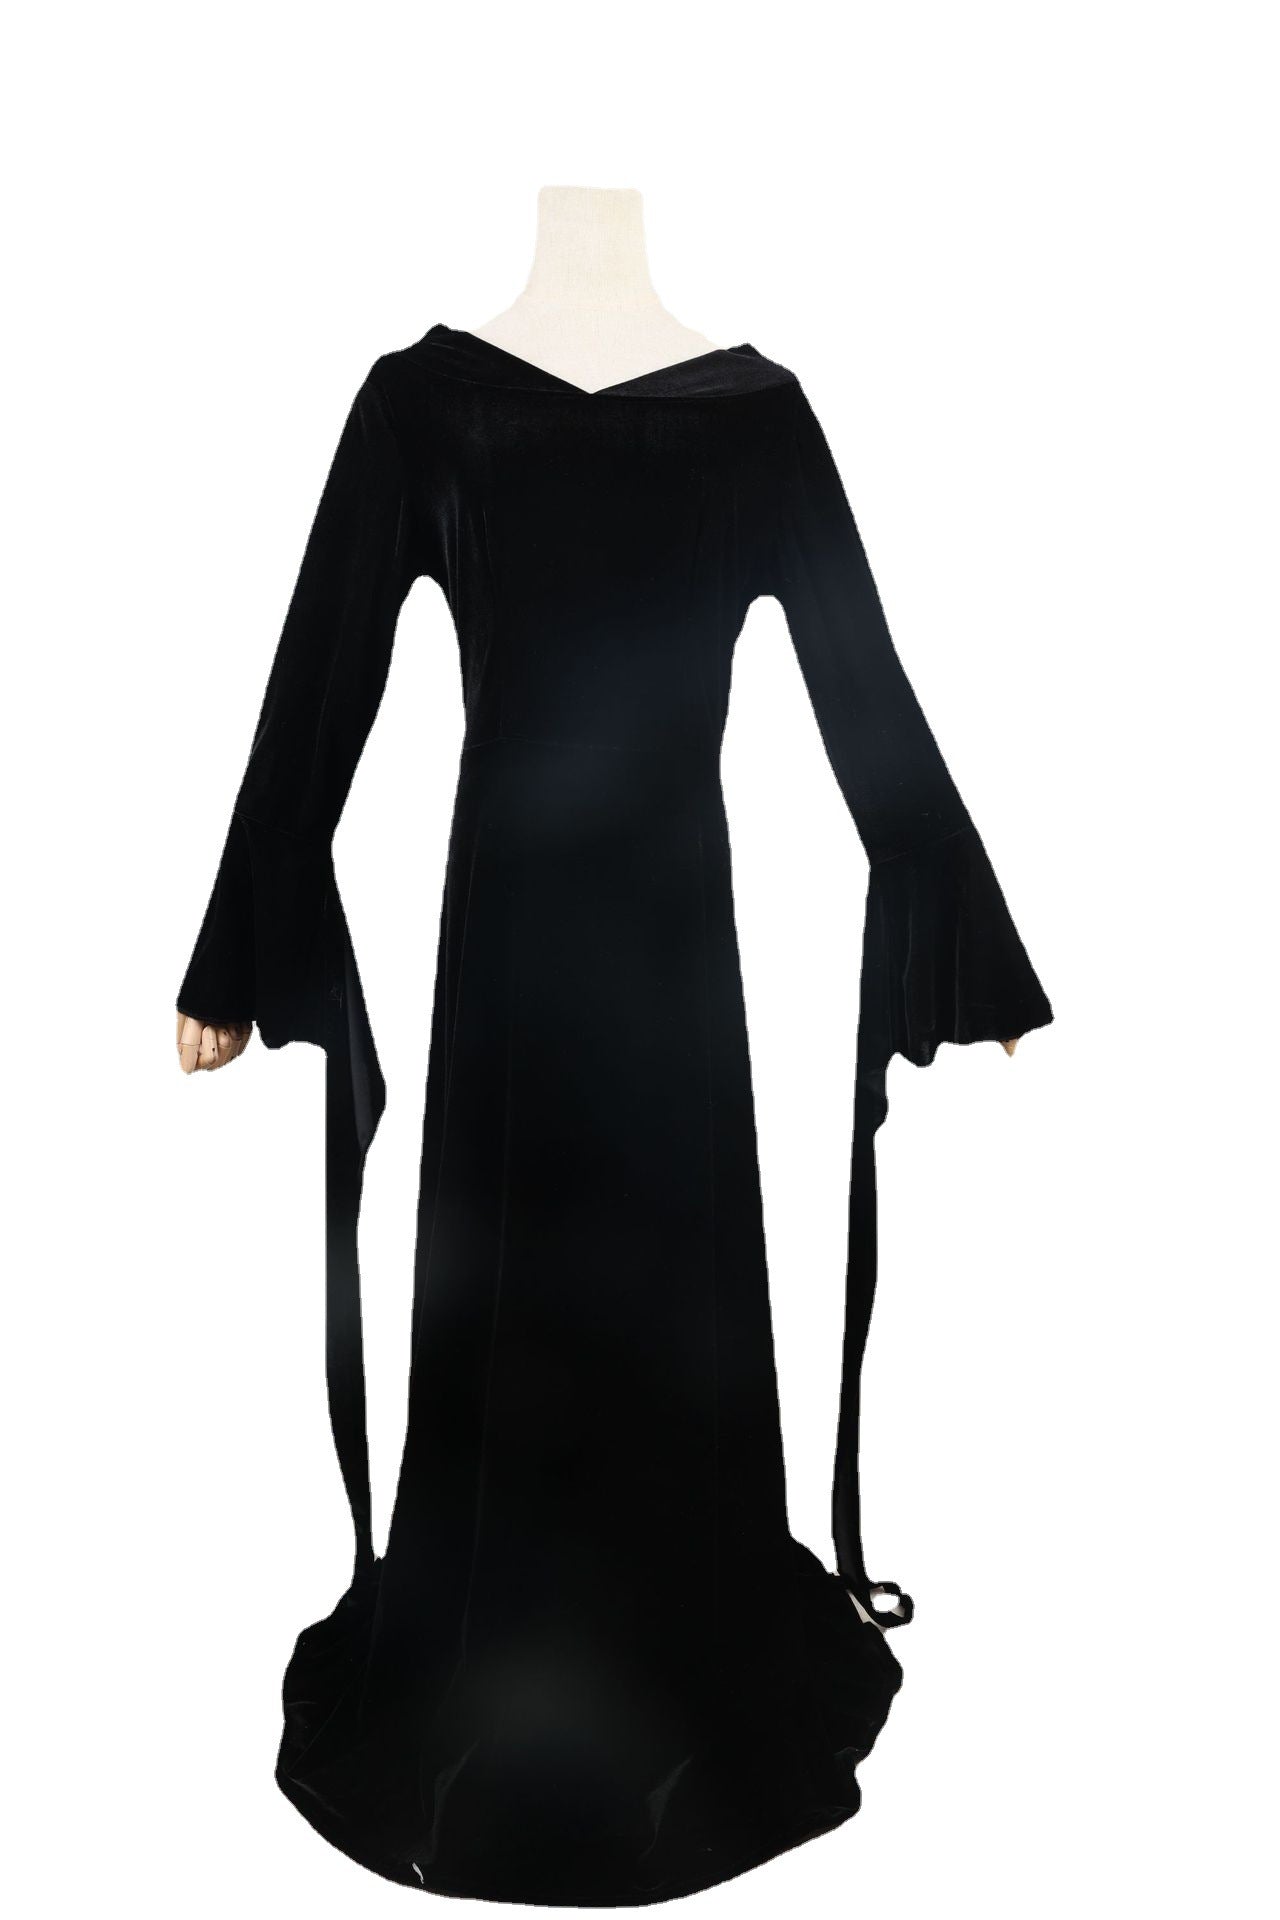 Adams Clothes Wednesday Black Dress Halloween Costumes